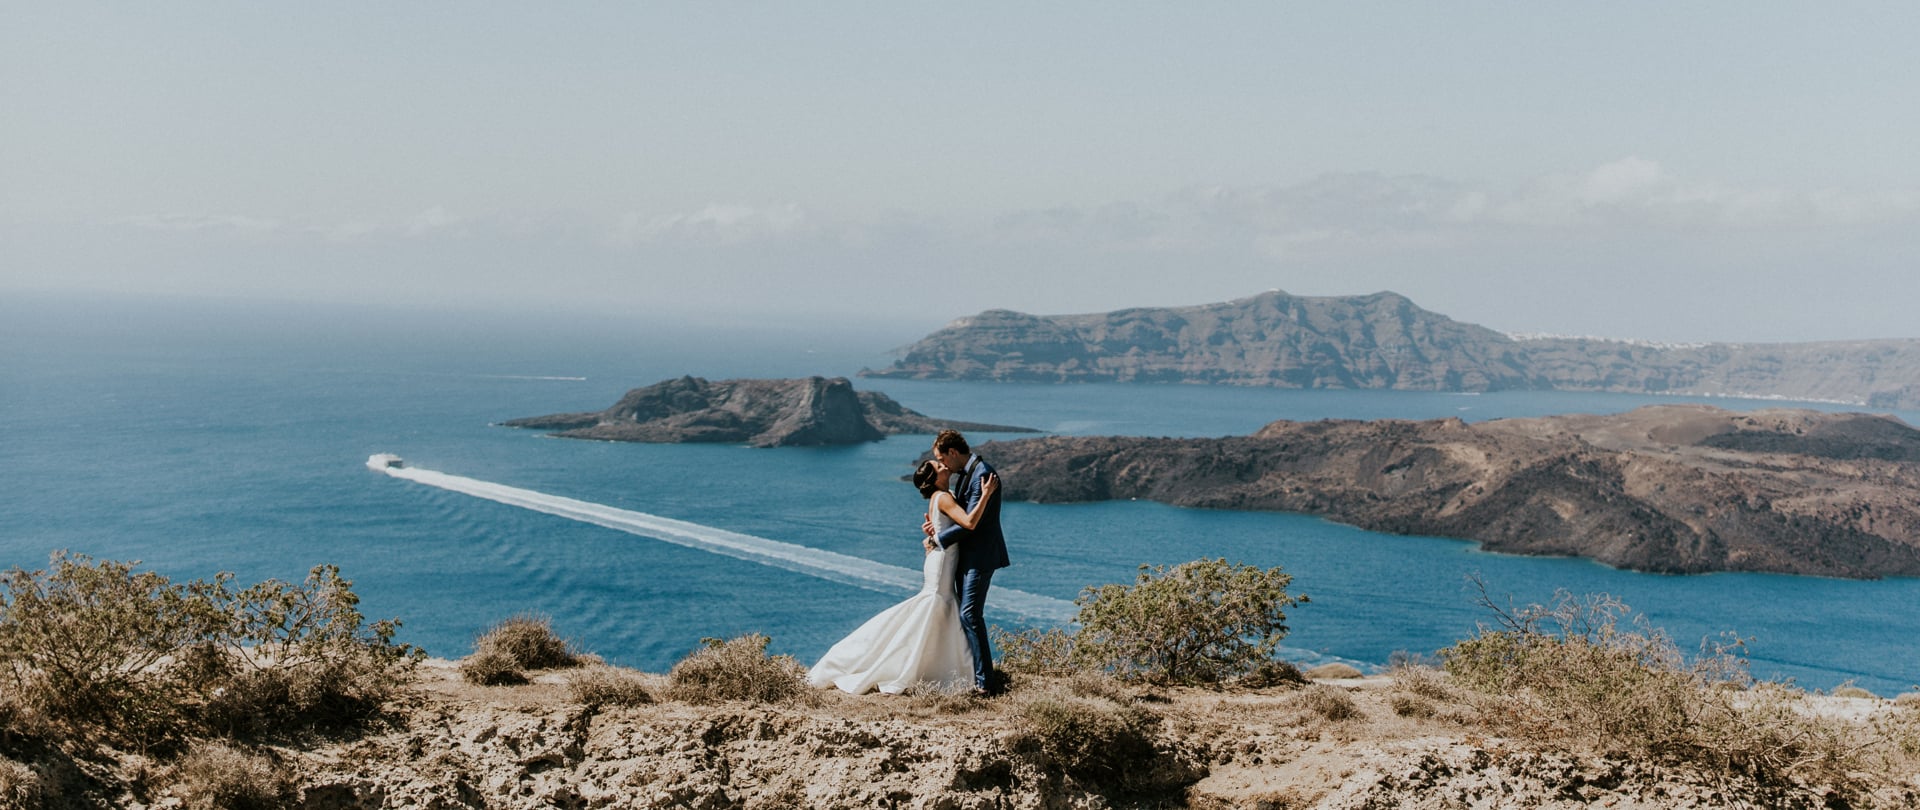 Leah & Jason Wedding Video Filmed at Santorini, Greece